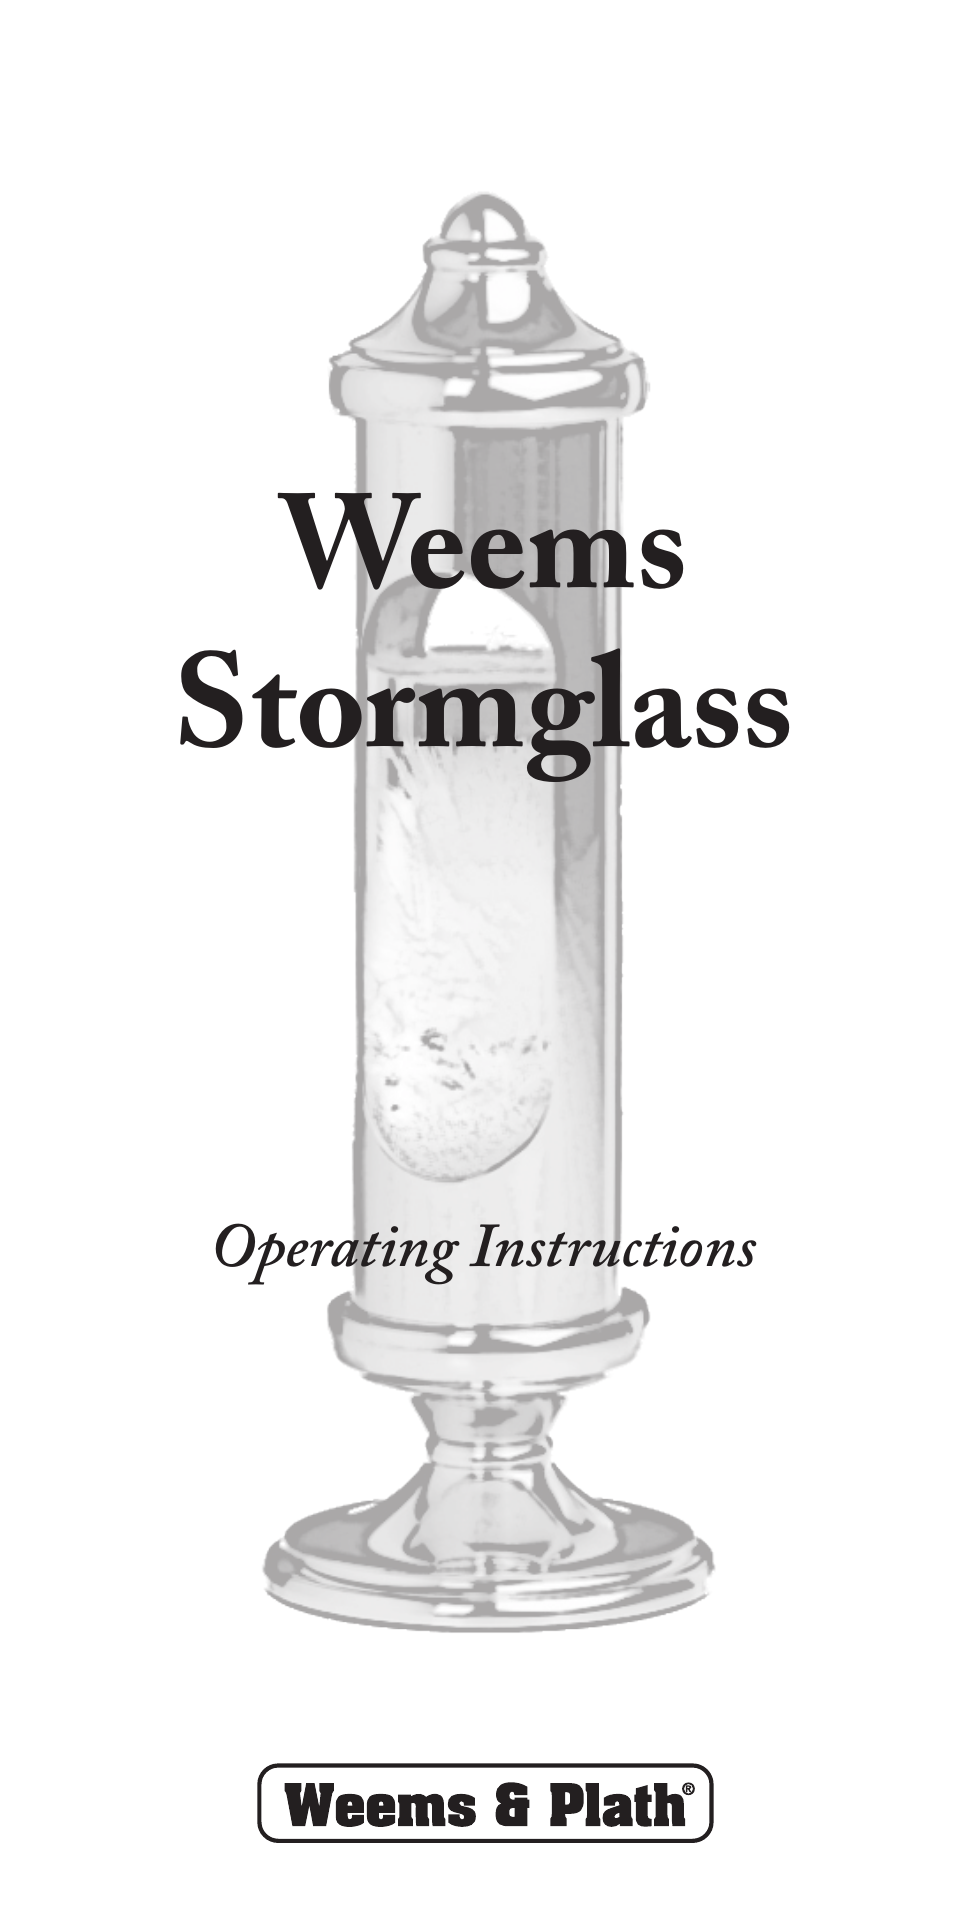 Weems Stormglass (Chrome) in Black Gift Box